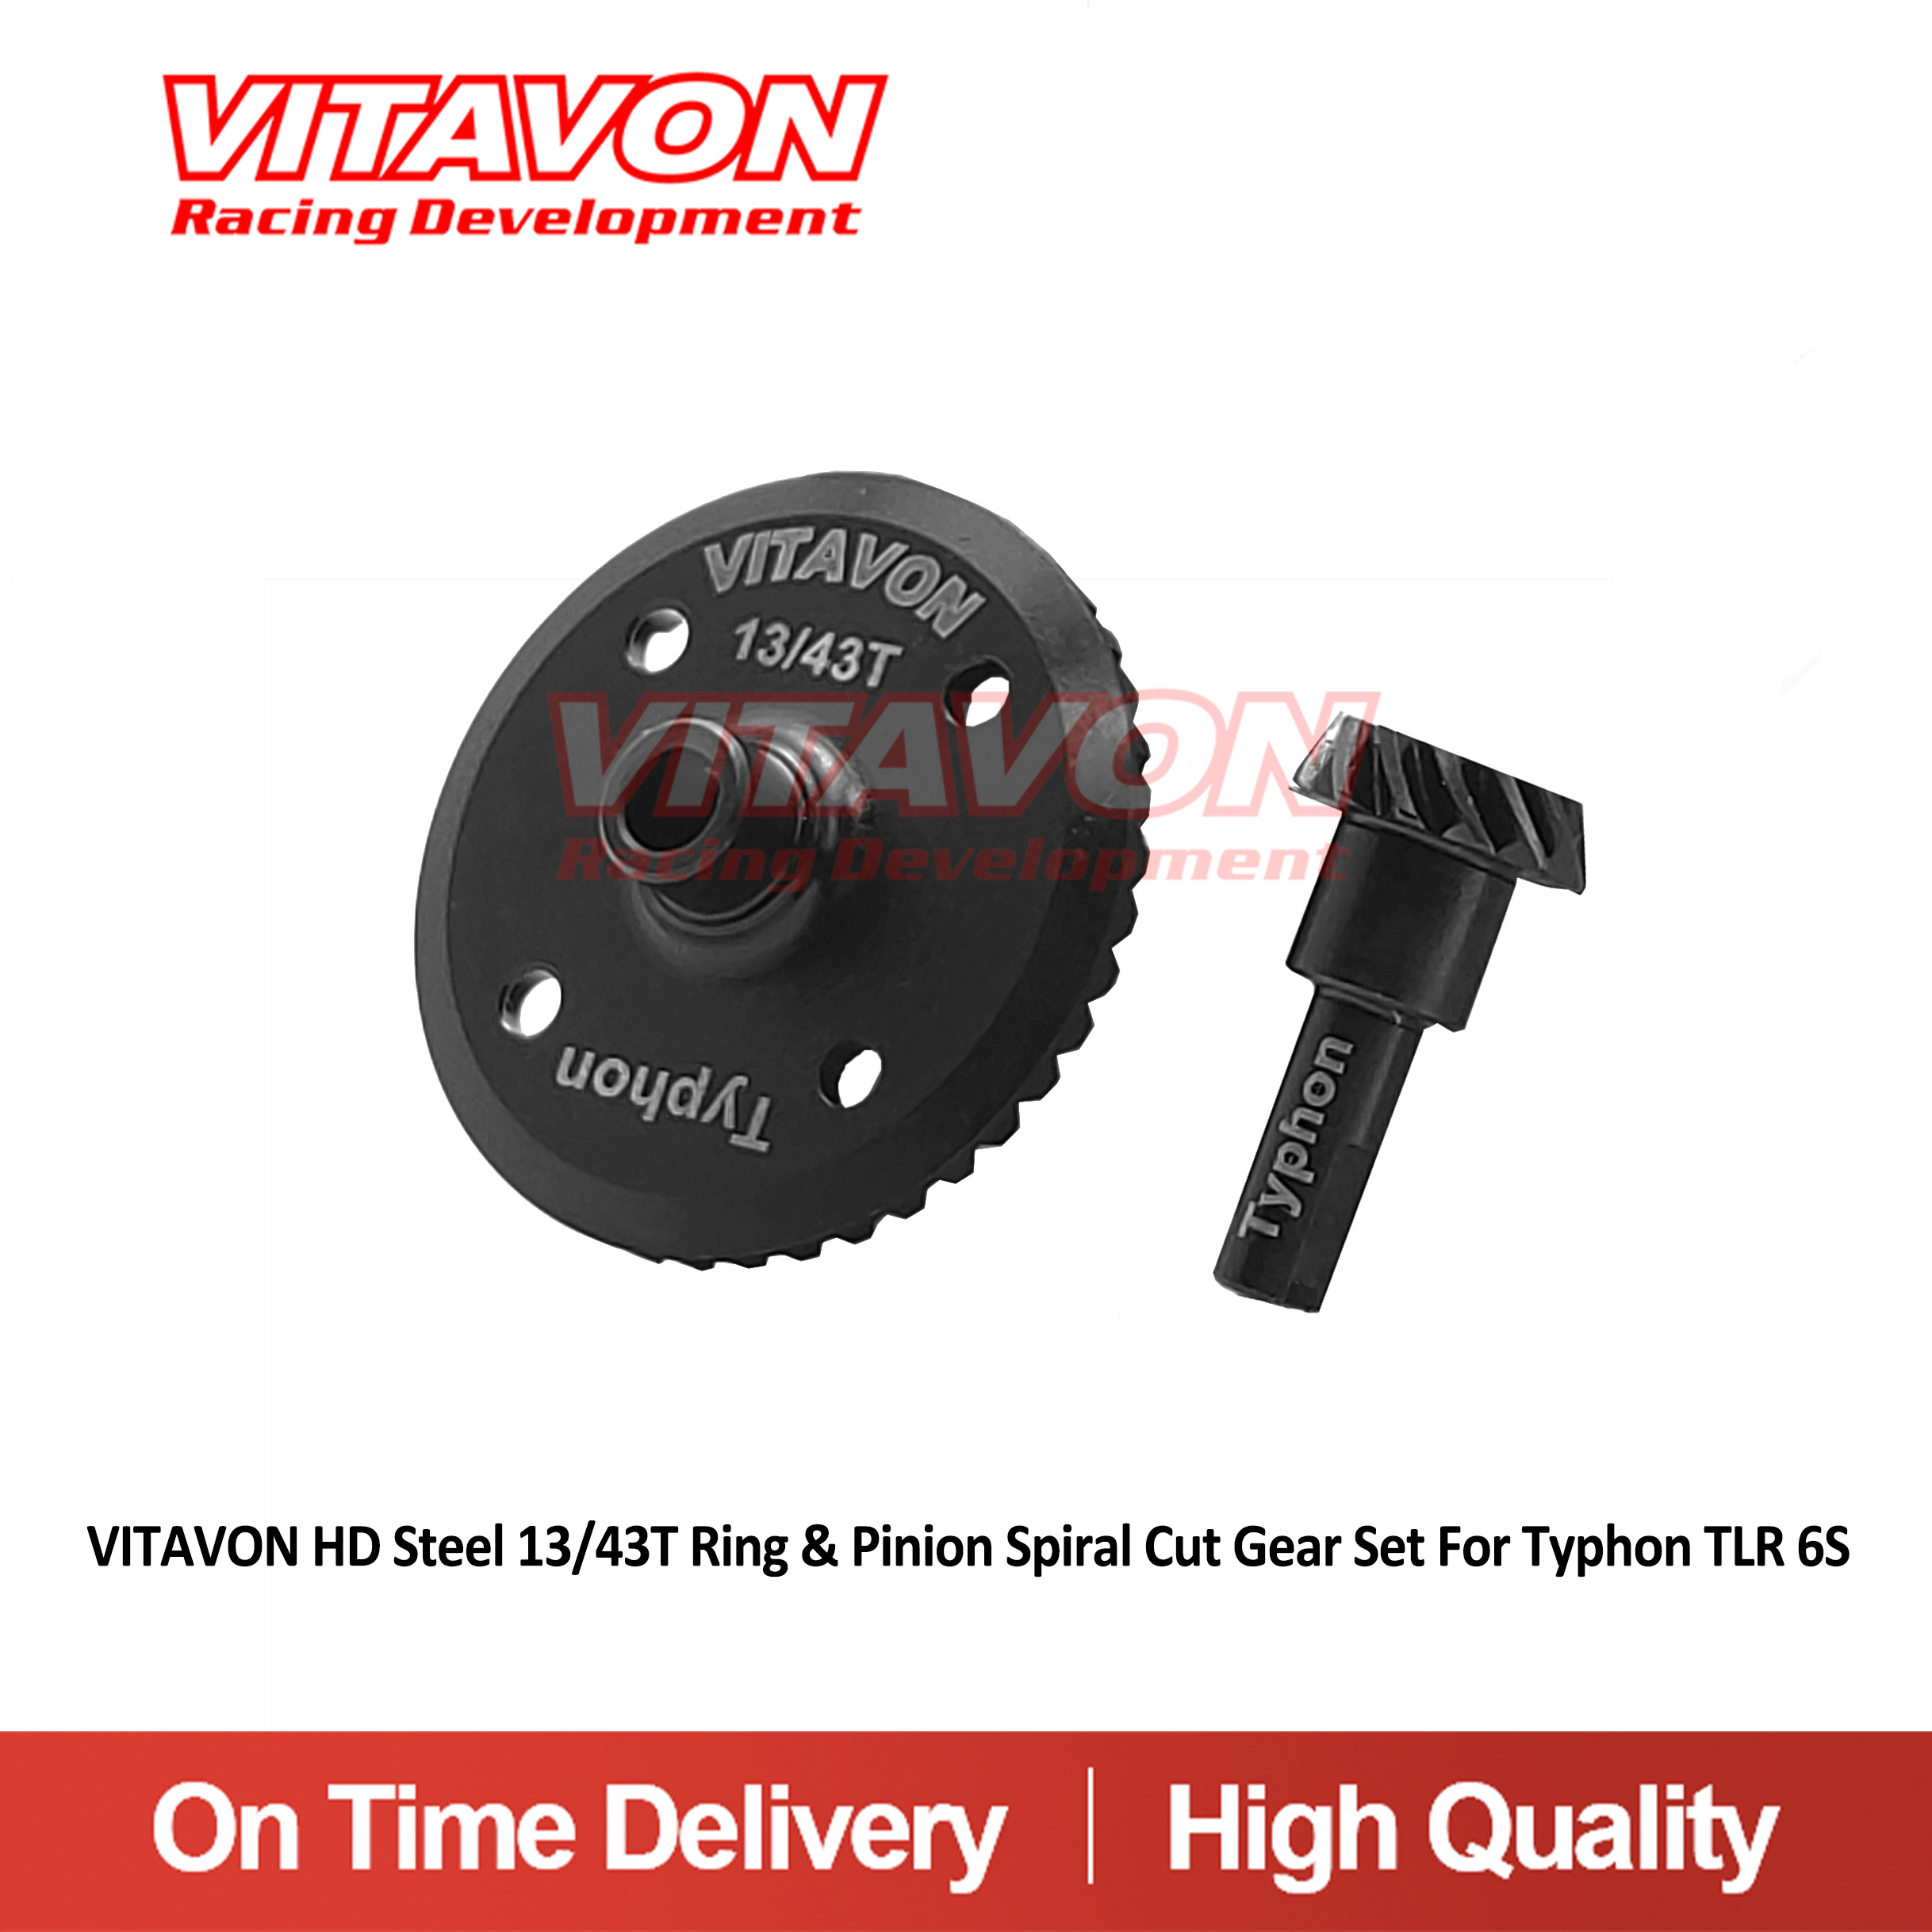 VITAVON HD Steel 13/43T Ring & Pinion Spiral Cut Gear Set For Typhon TLR 6S